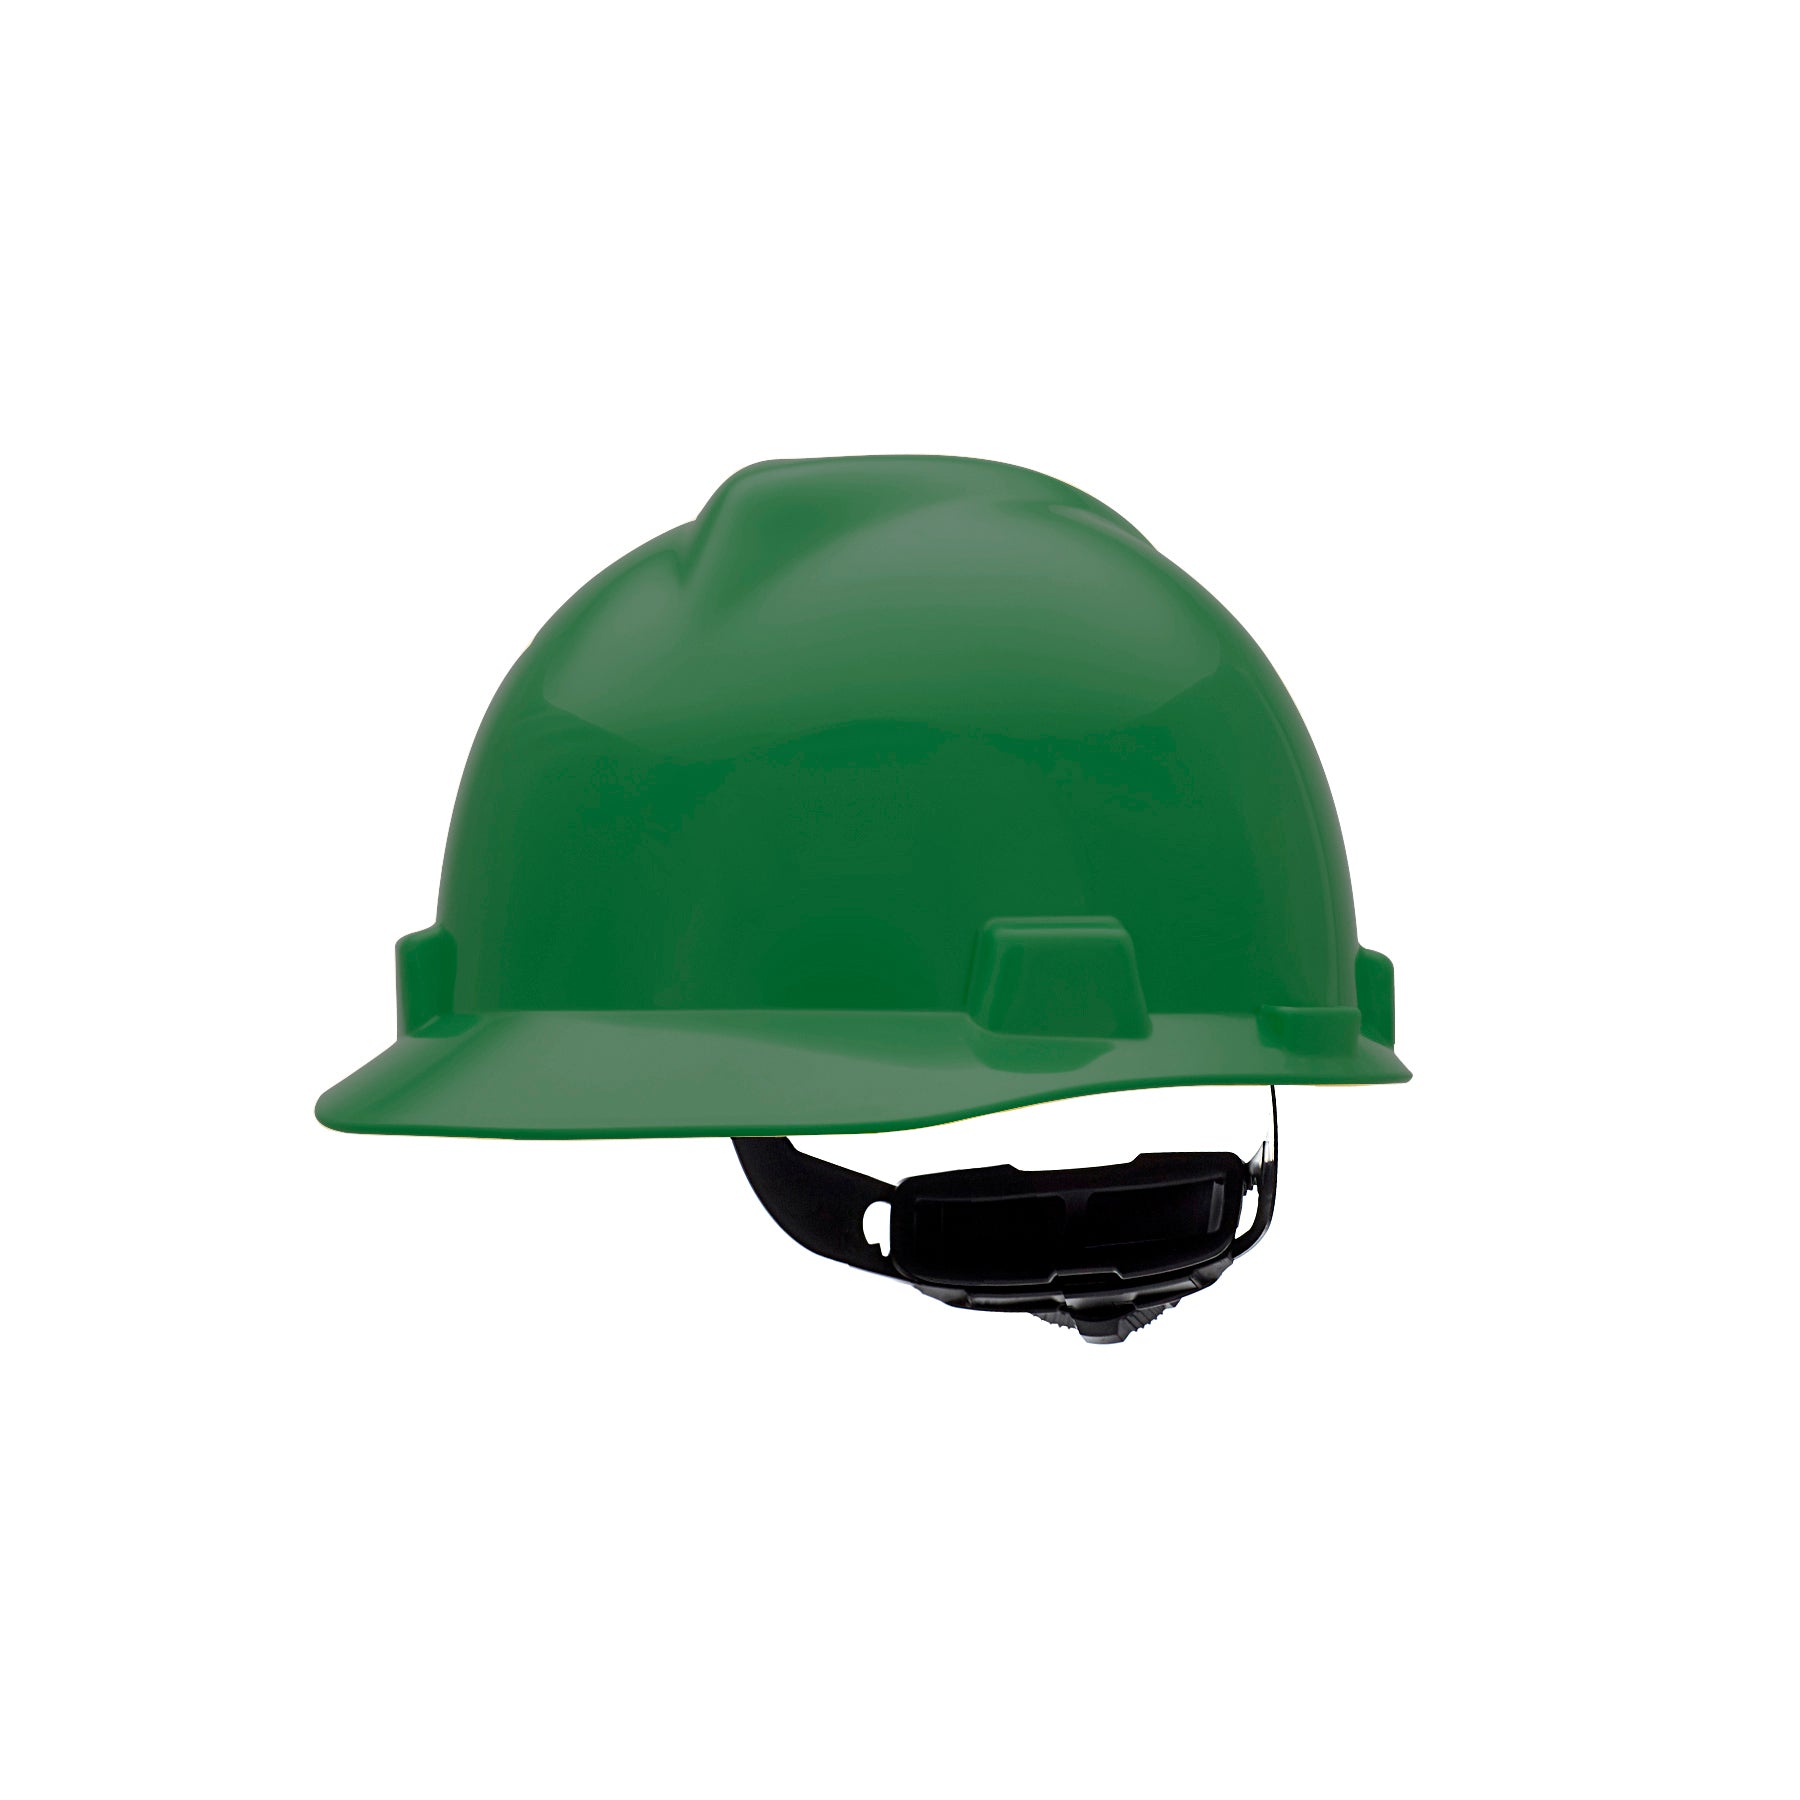 V-Gard Slotted Cap, Green, w/Fas-Trac III Suspension